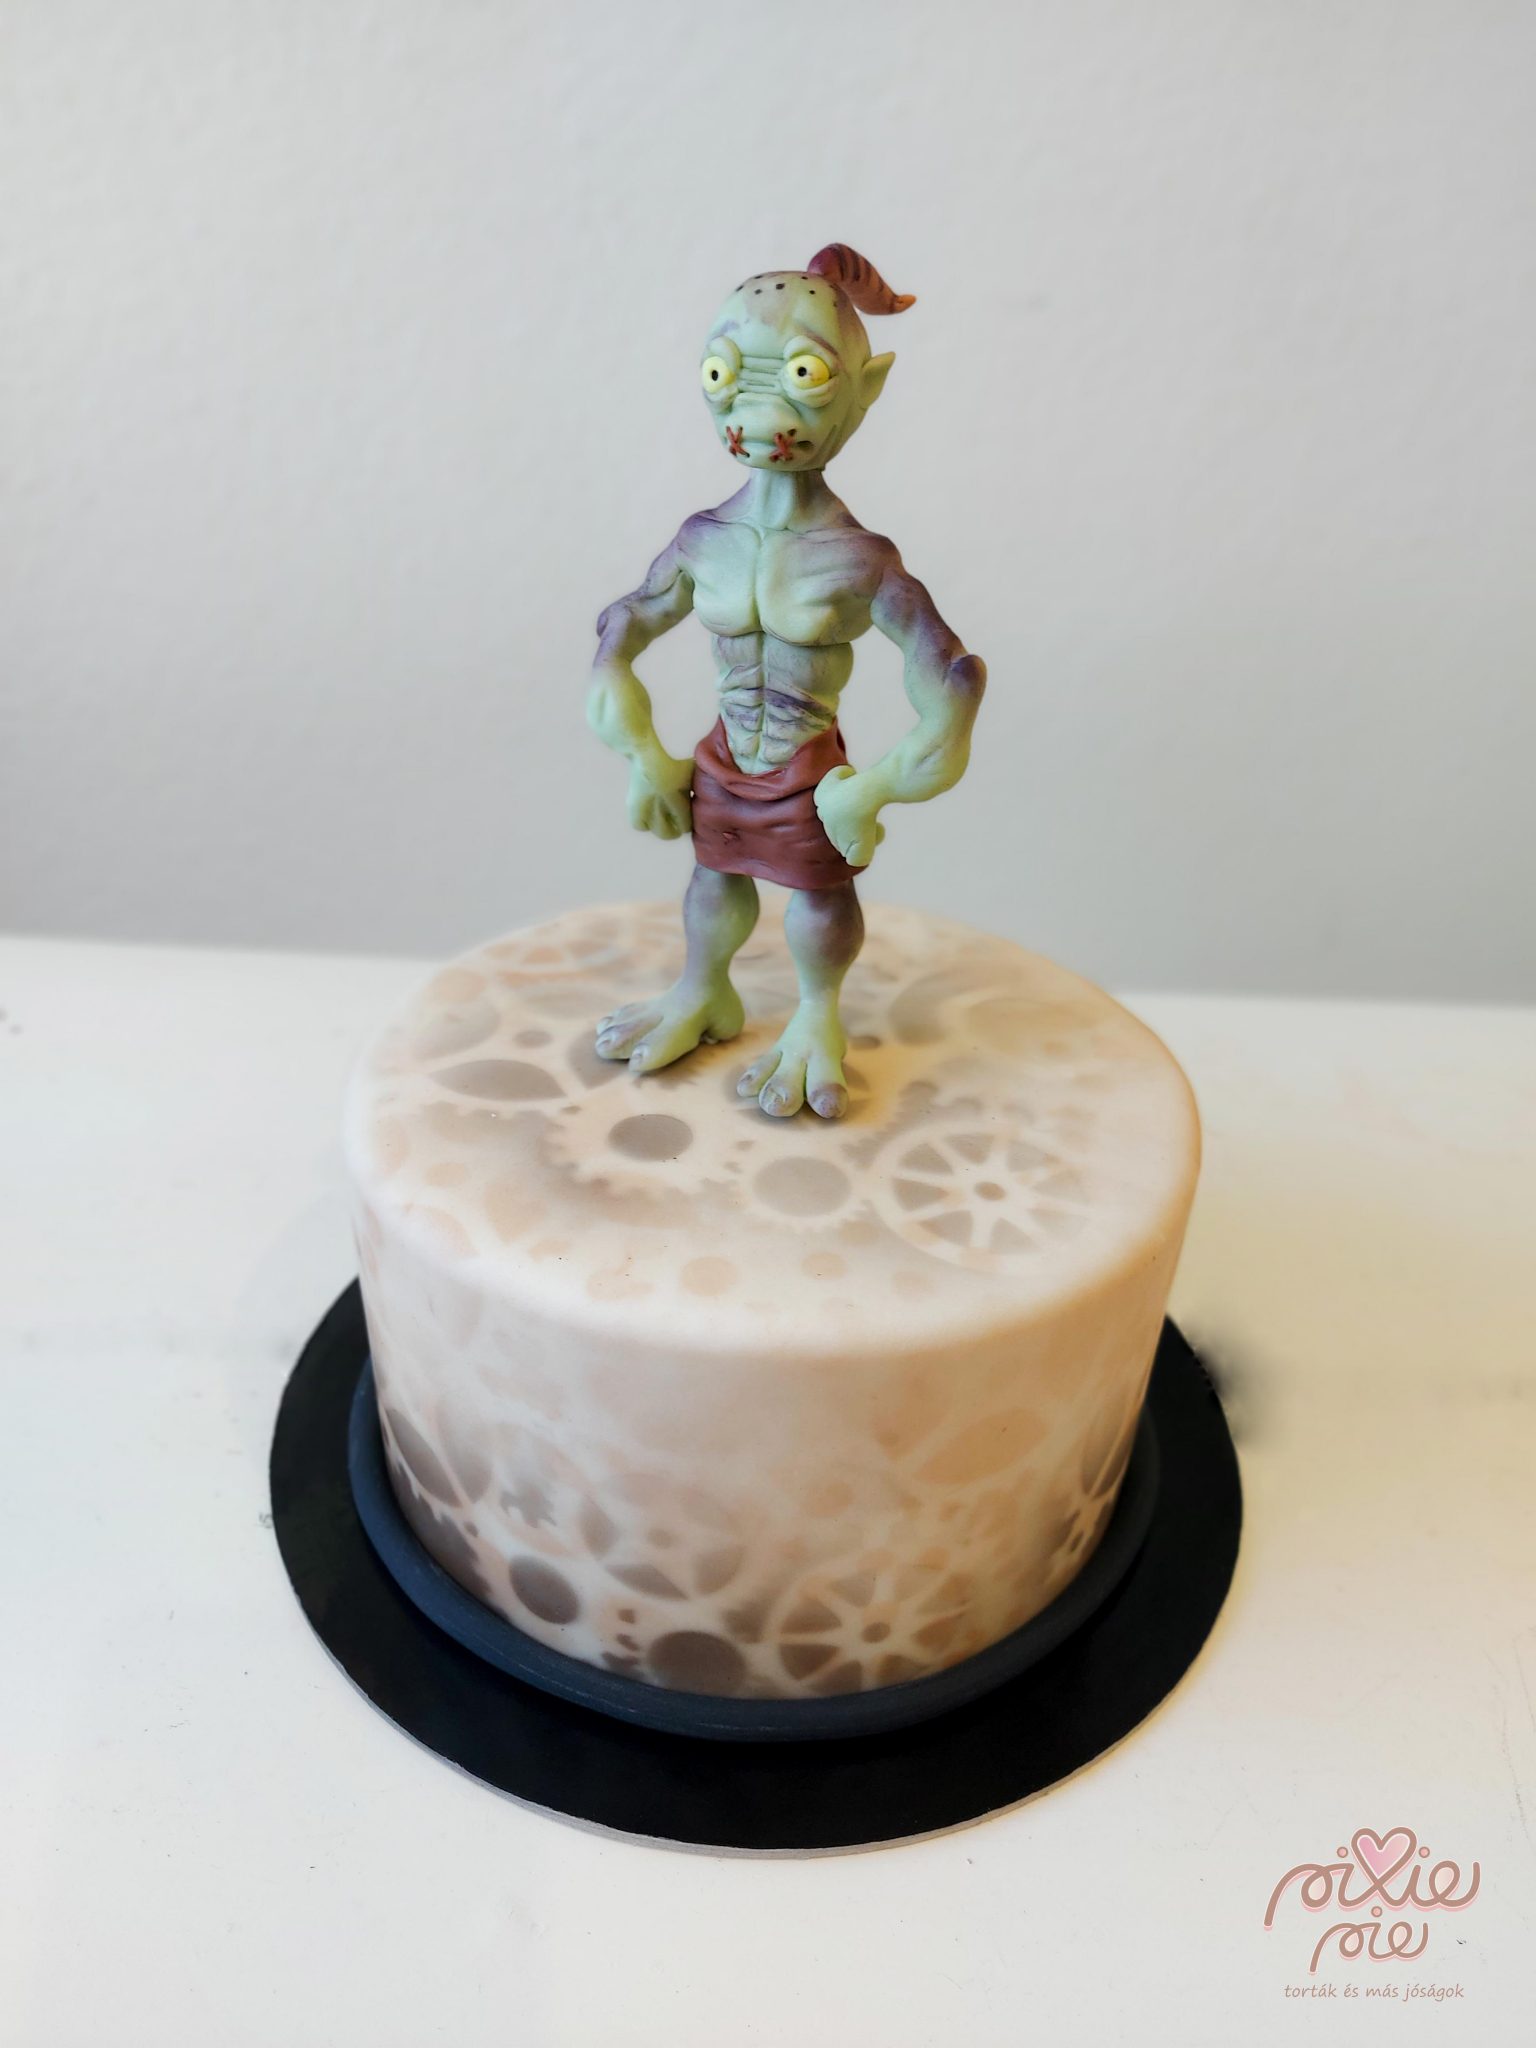 Oddworld-Soulstorm-cake-1536x2048.jpg